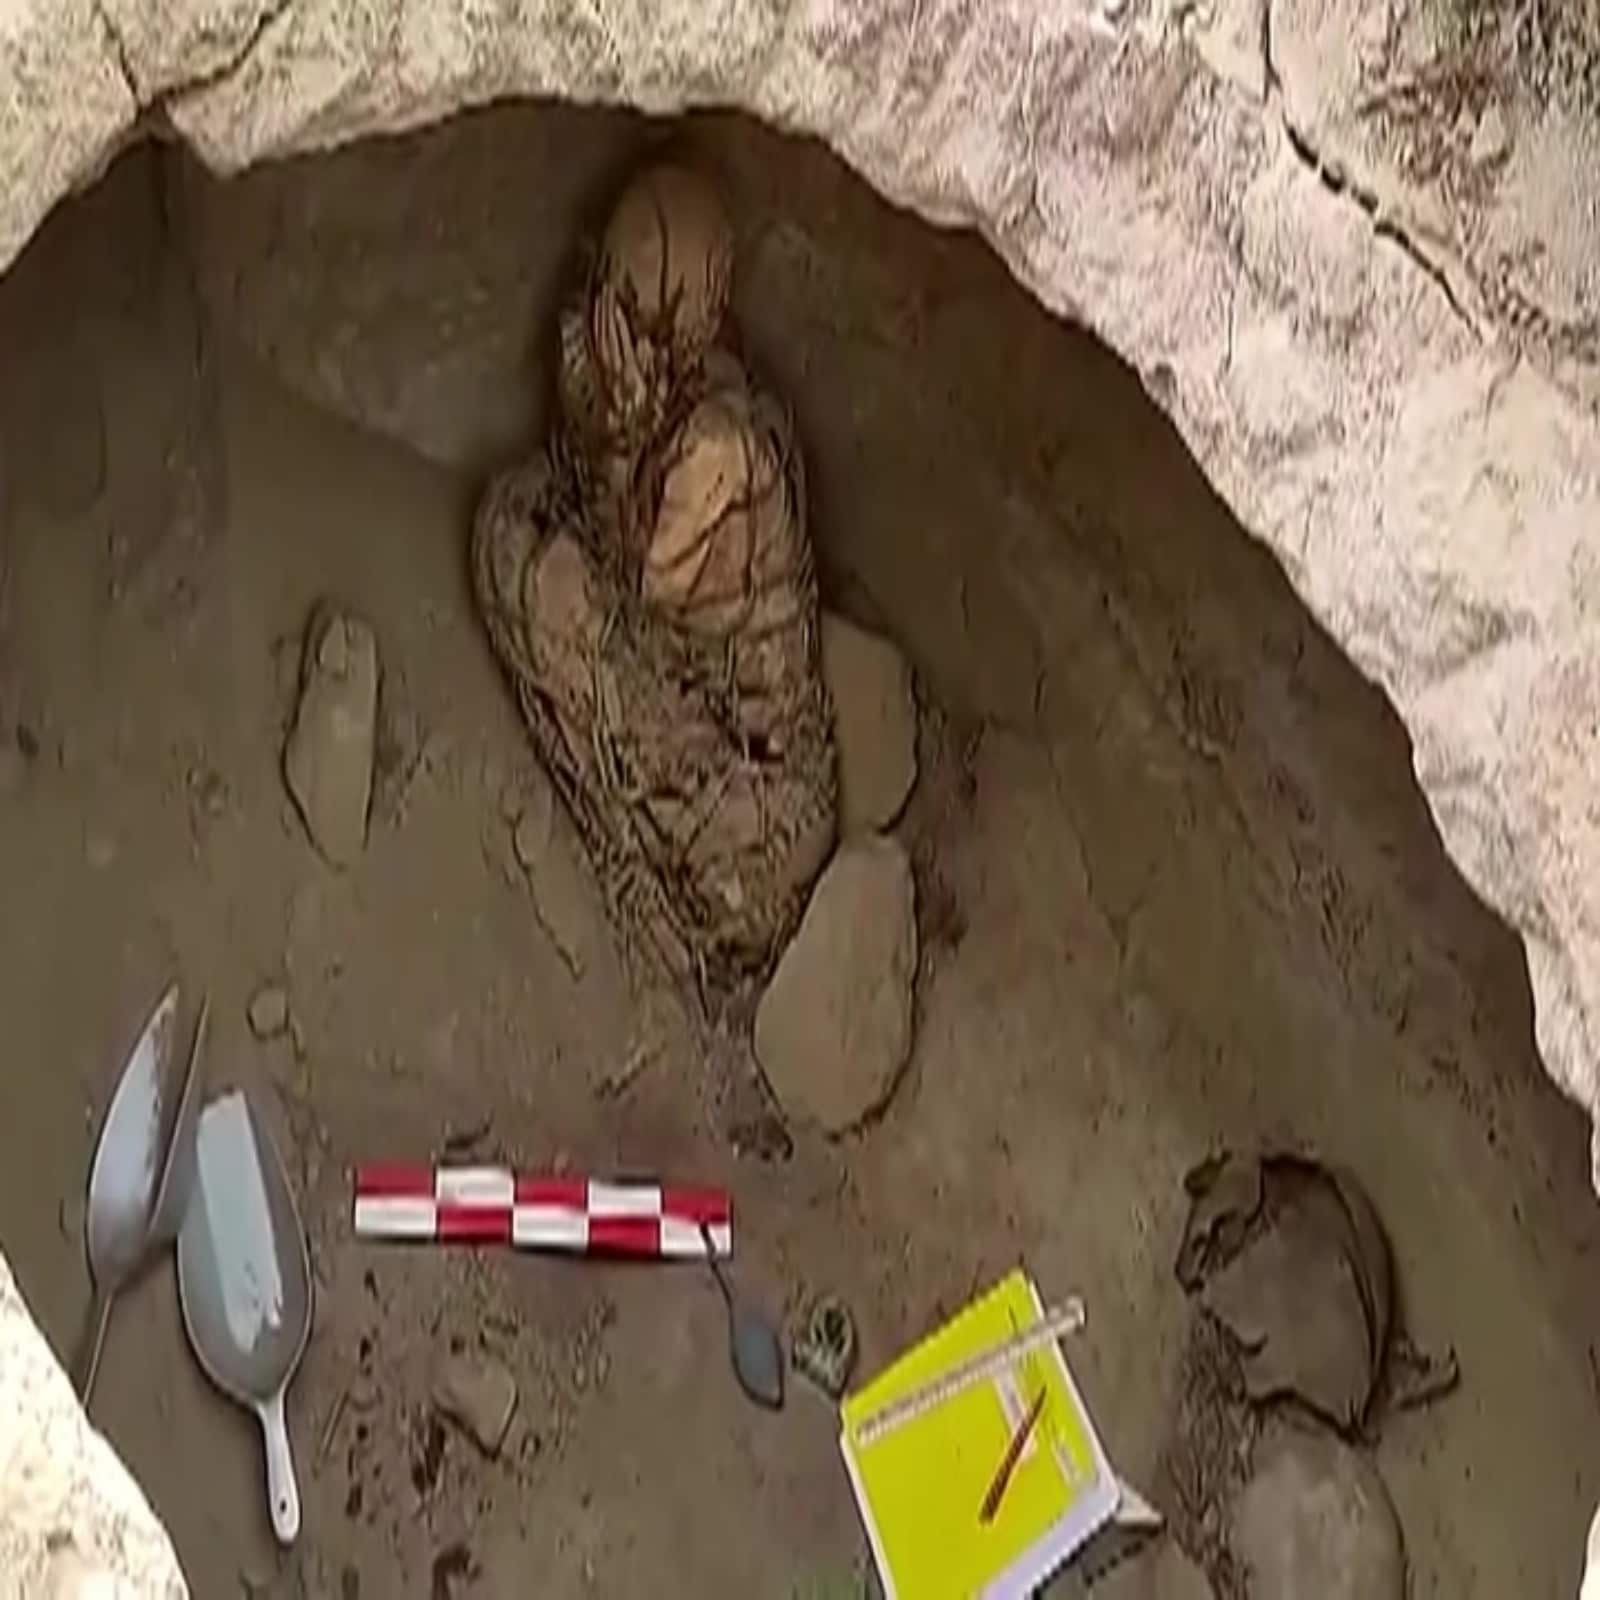 peru mummy found 800 year old